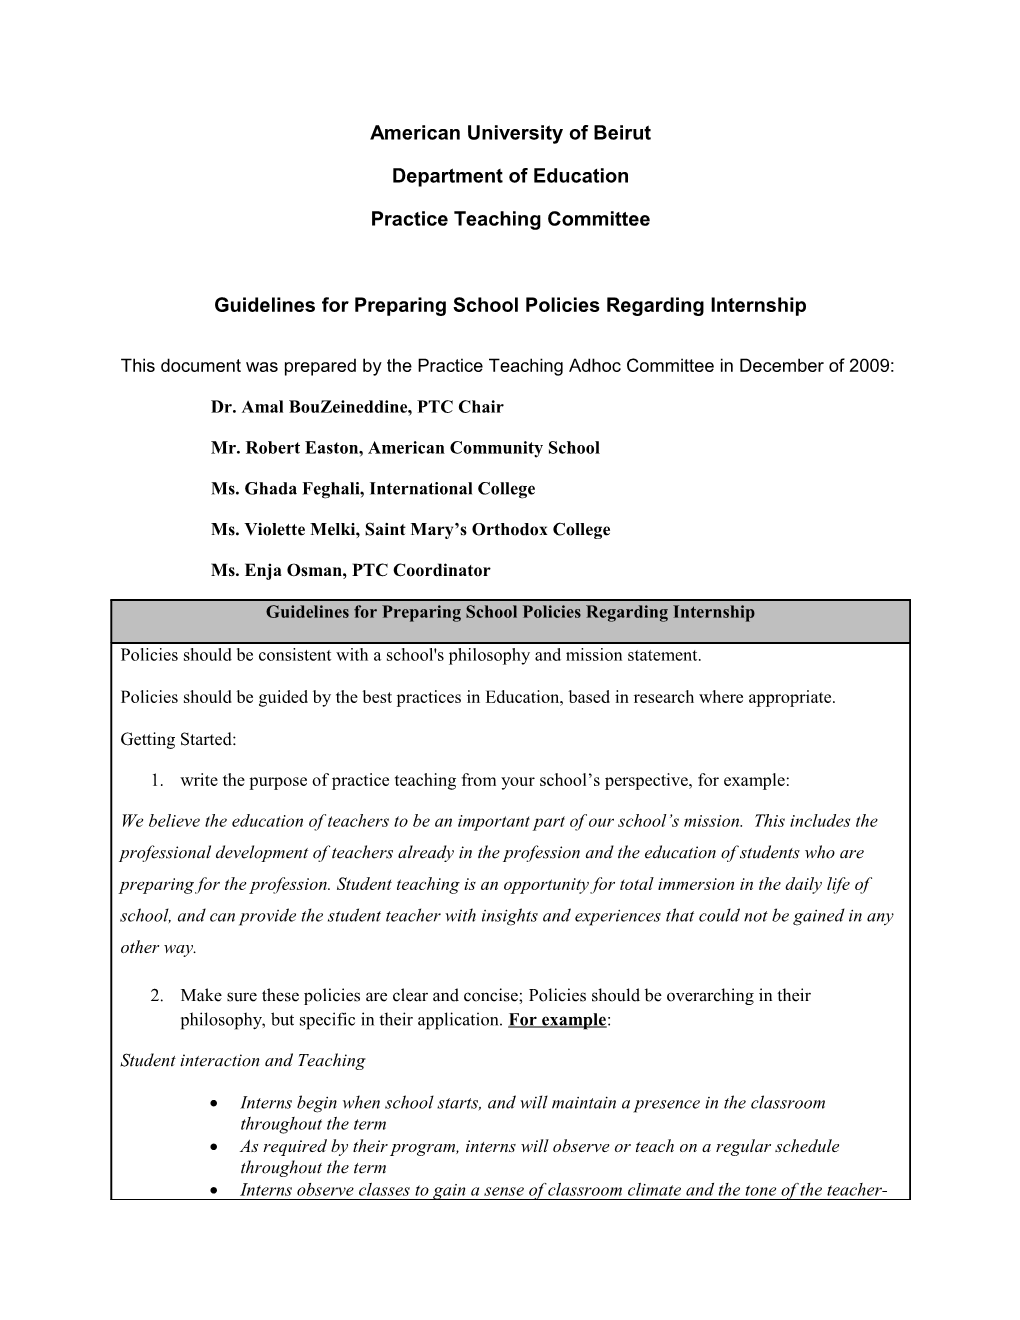 PTC Guidelines for Preparing School Policies Regarding Interns